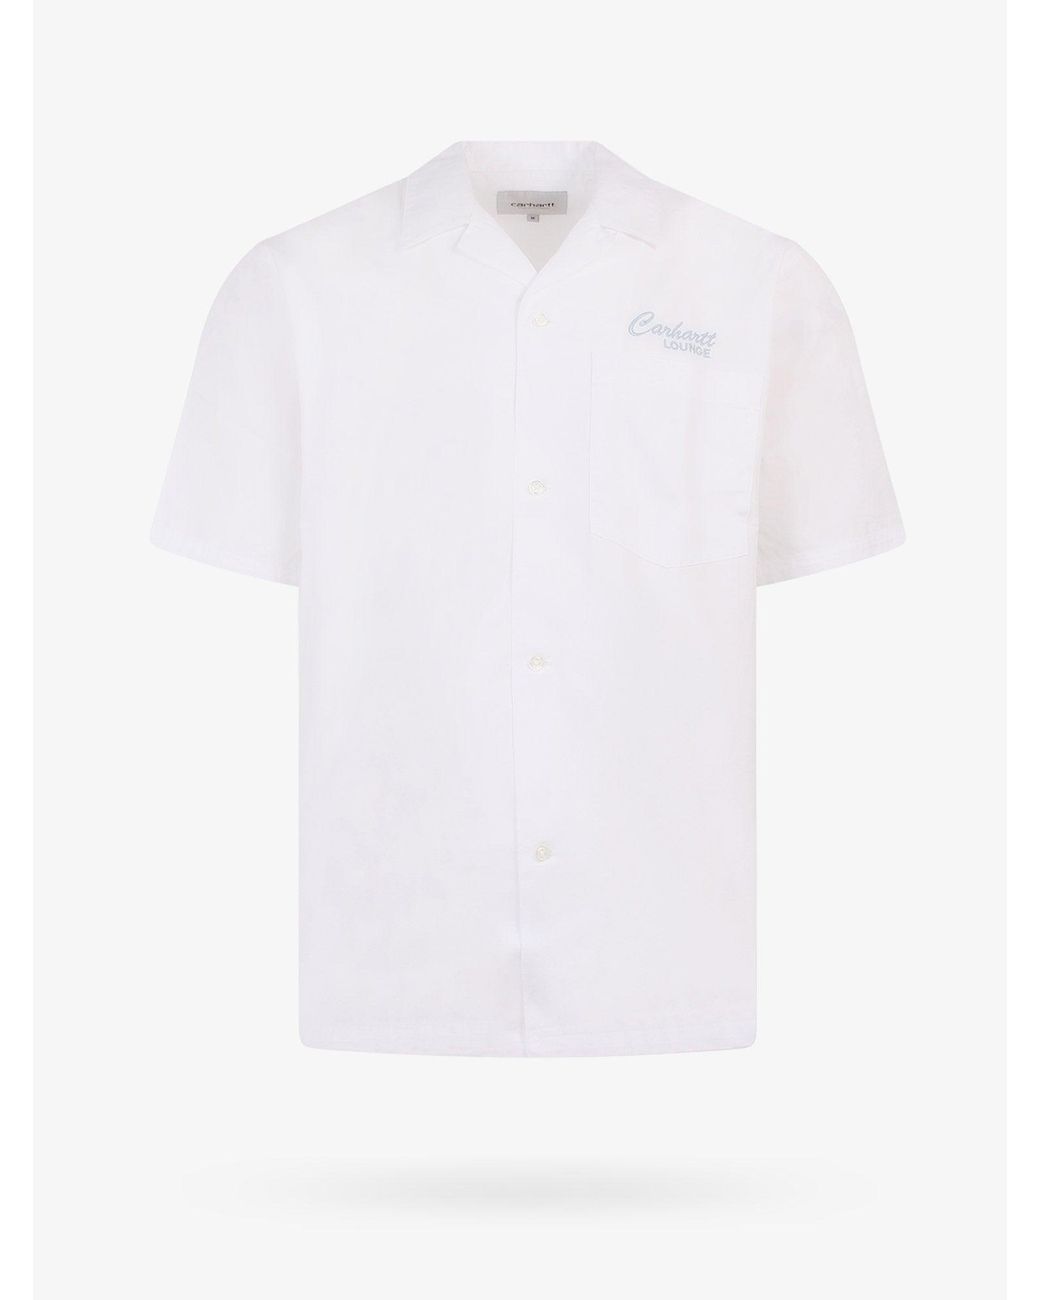 Carhartt WIP Cotton Sshirt in White for Men | Lyst